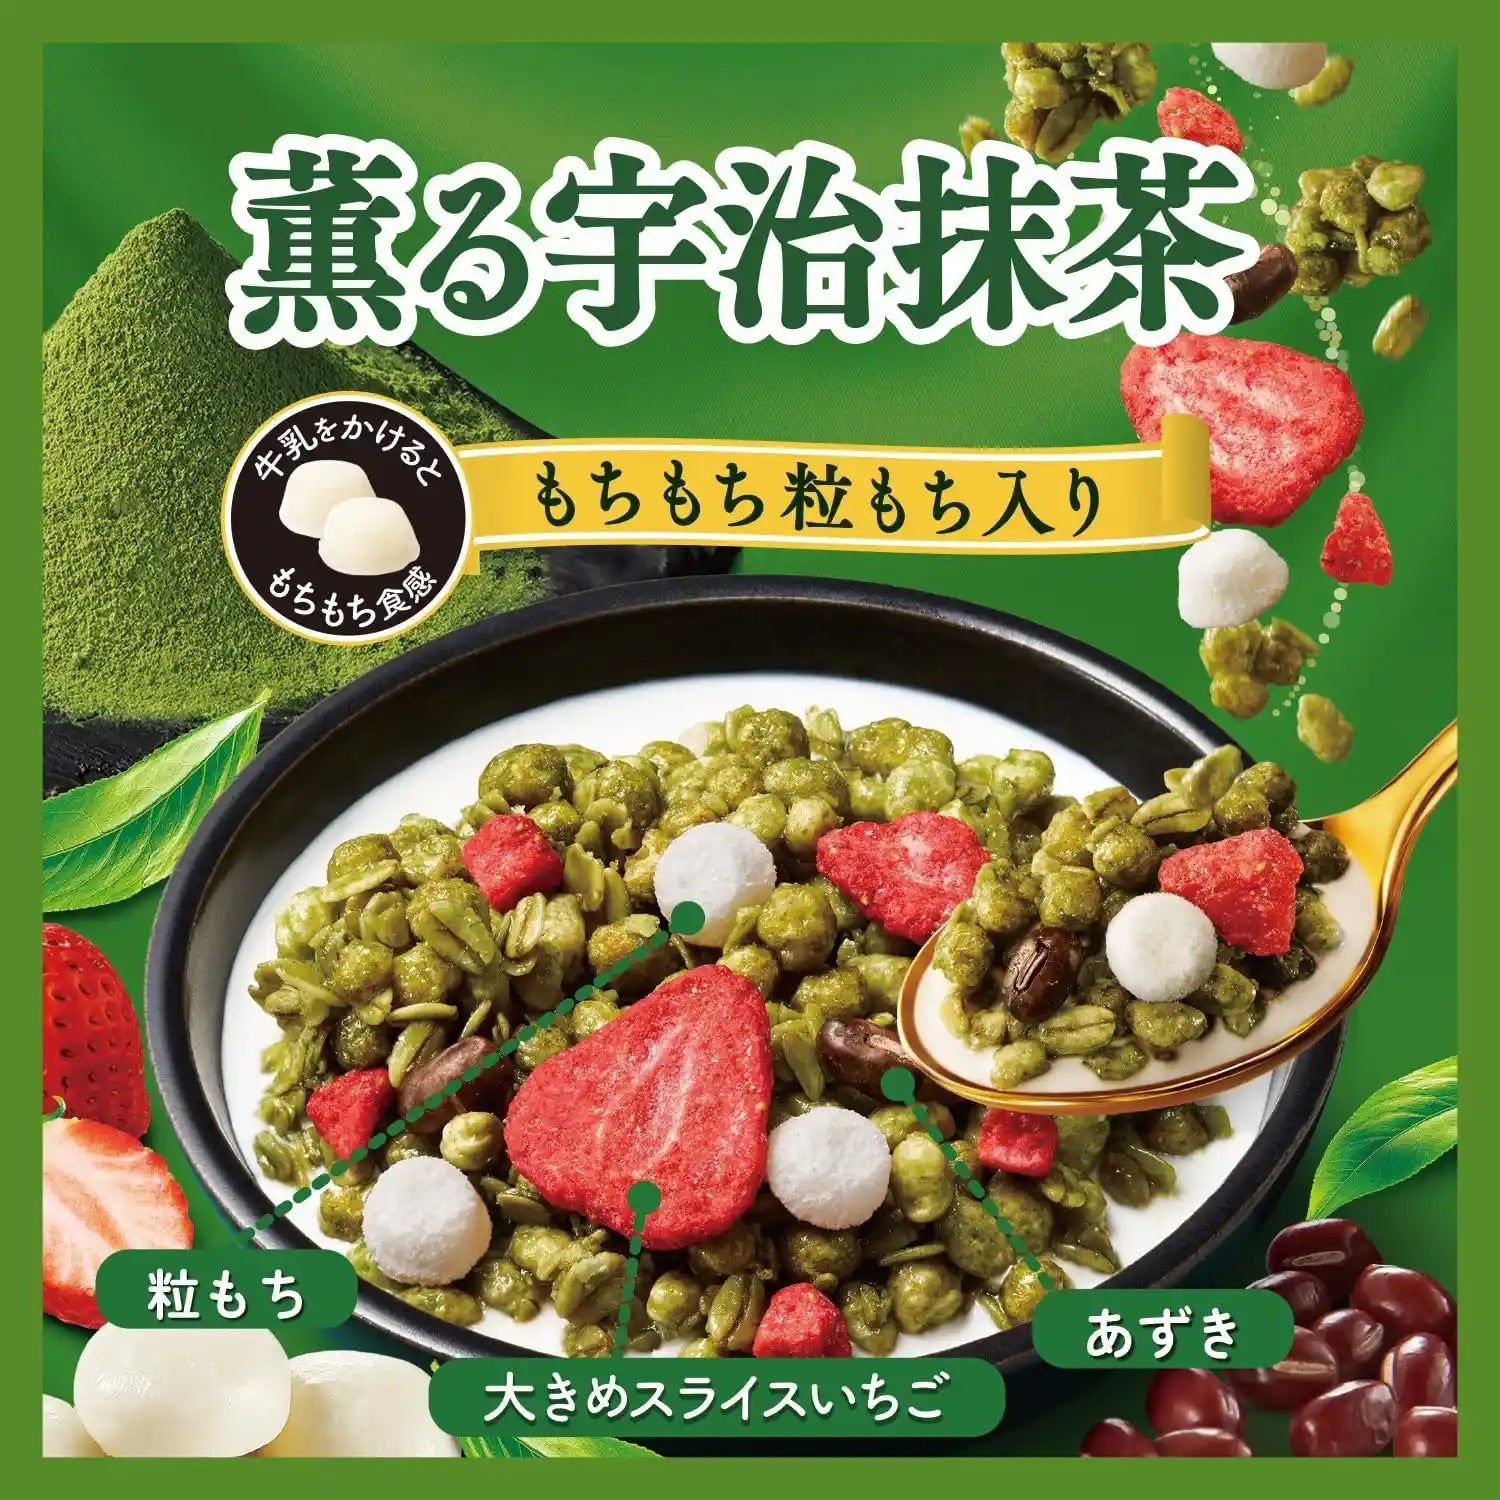 Nissin Foods Goro Gura Uji Matcha Granola Cereal 280g